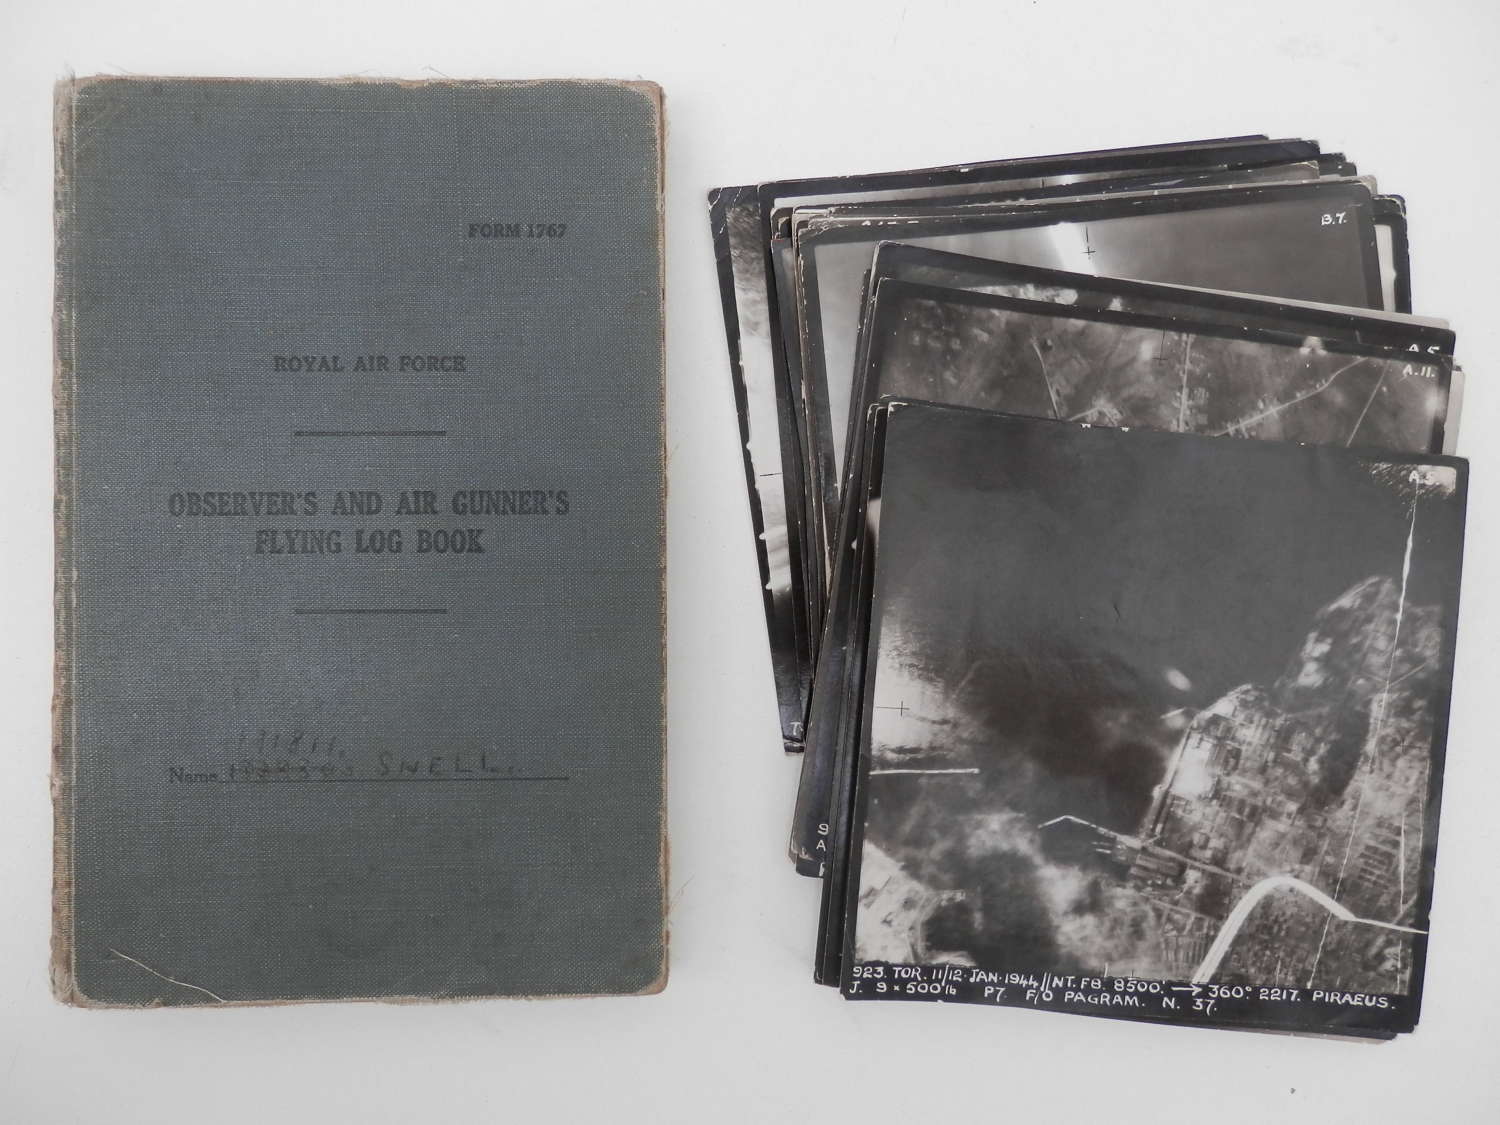 RAF log book and bombing photos